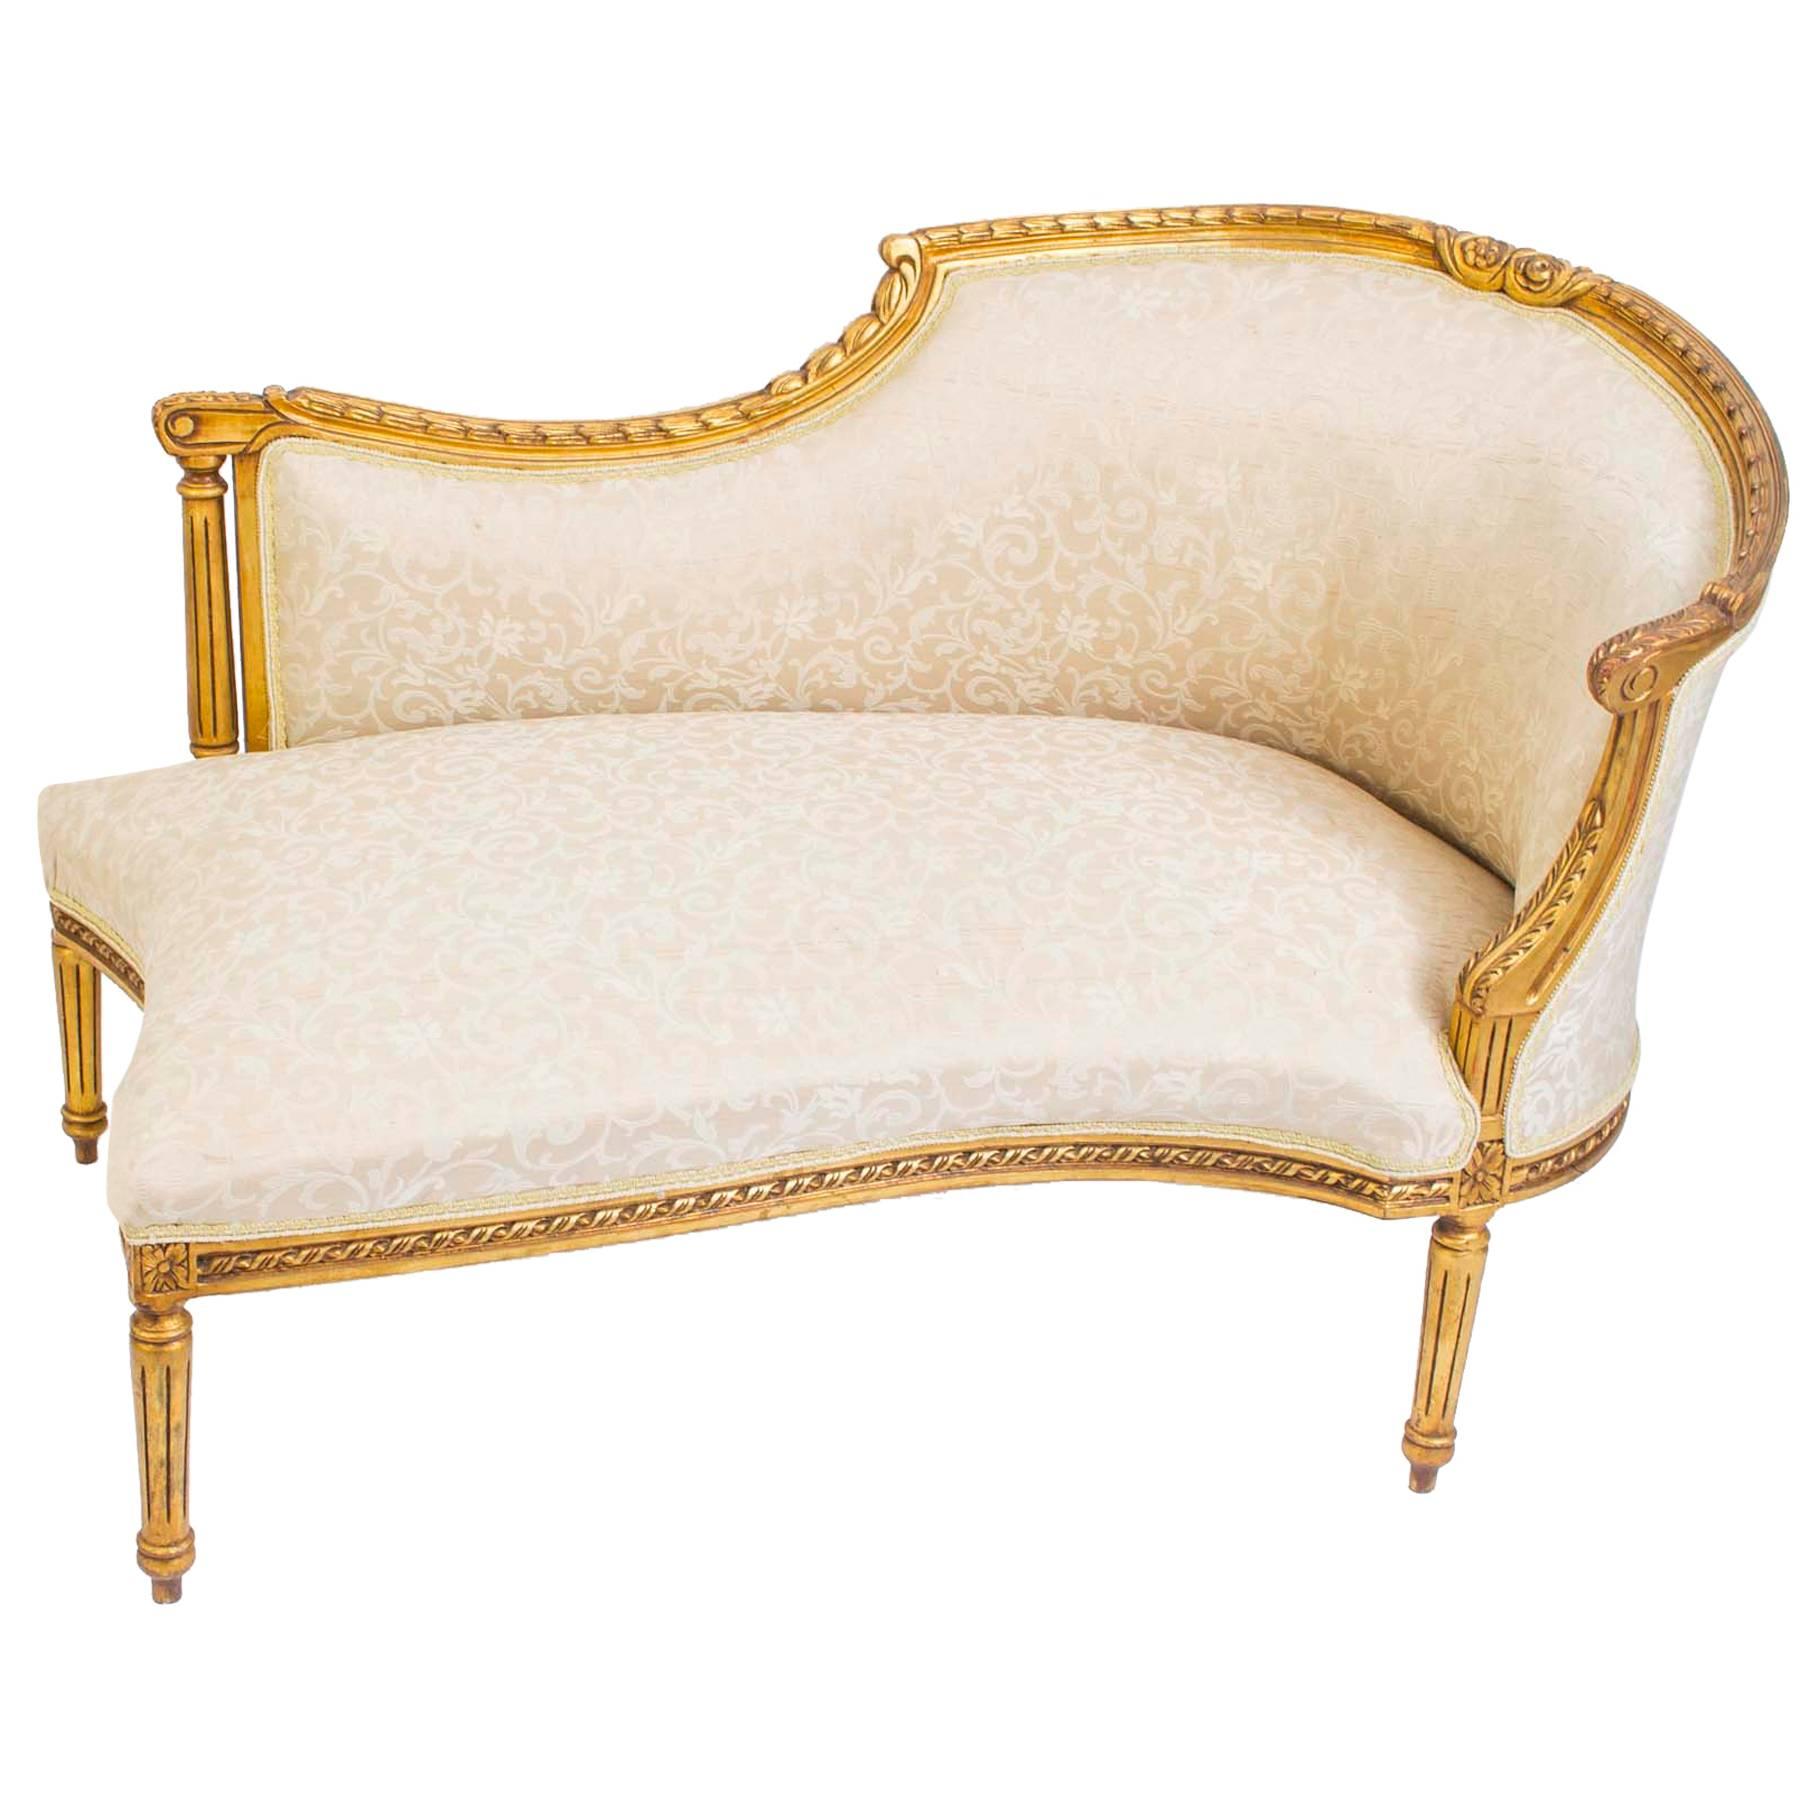 Stunning Louis XVI Style Giltwood Chaise Longue